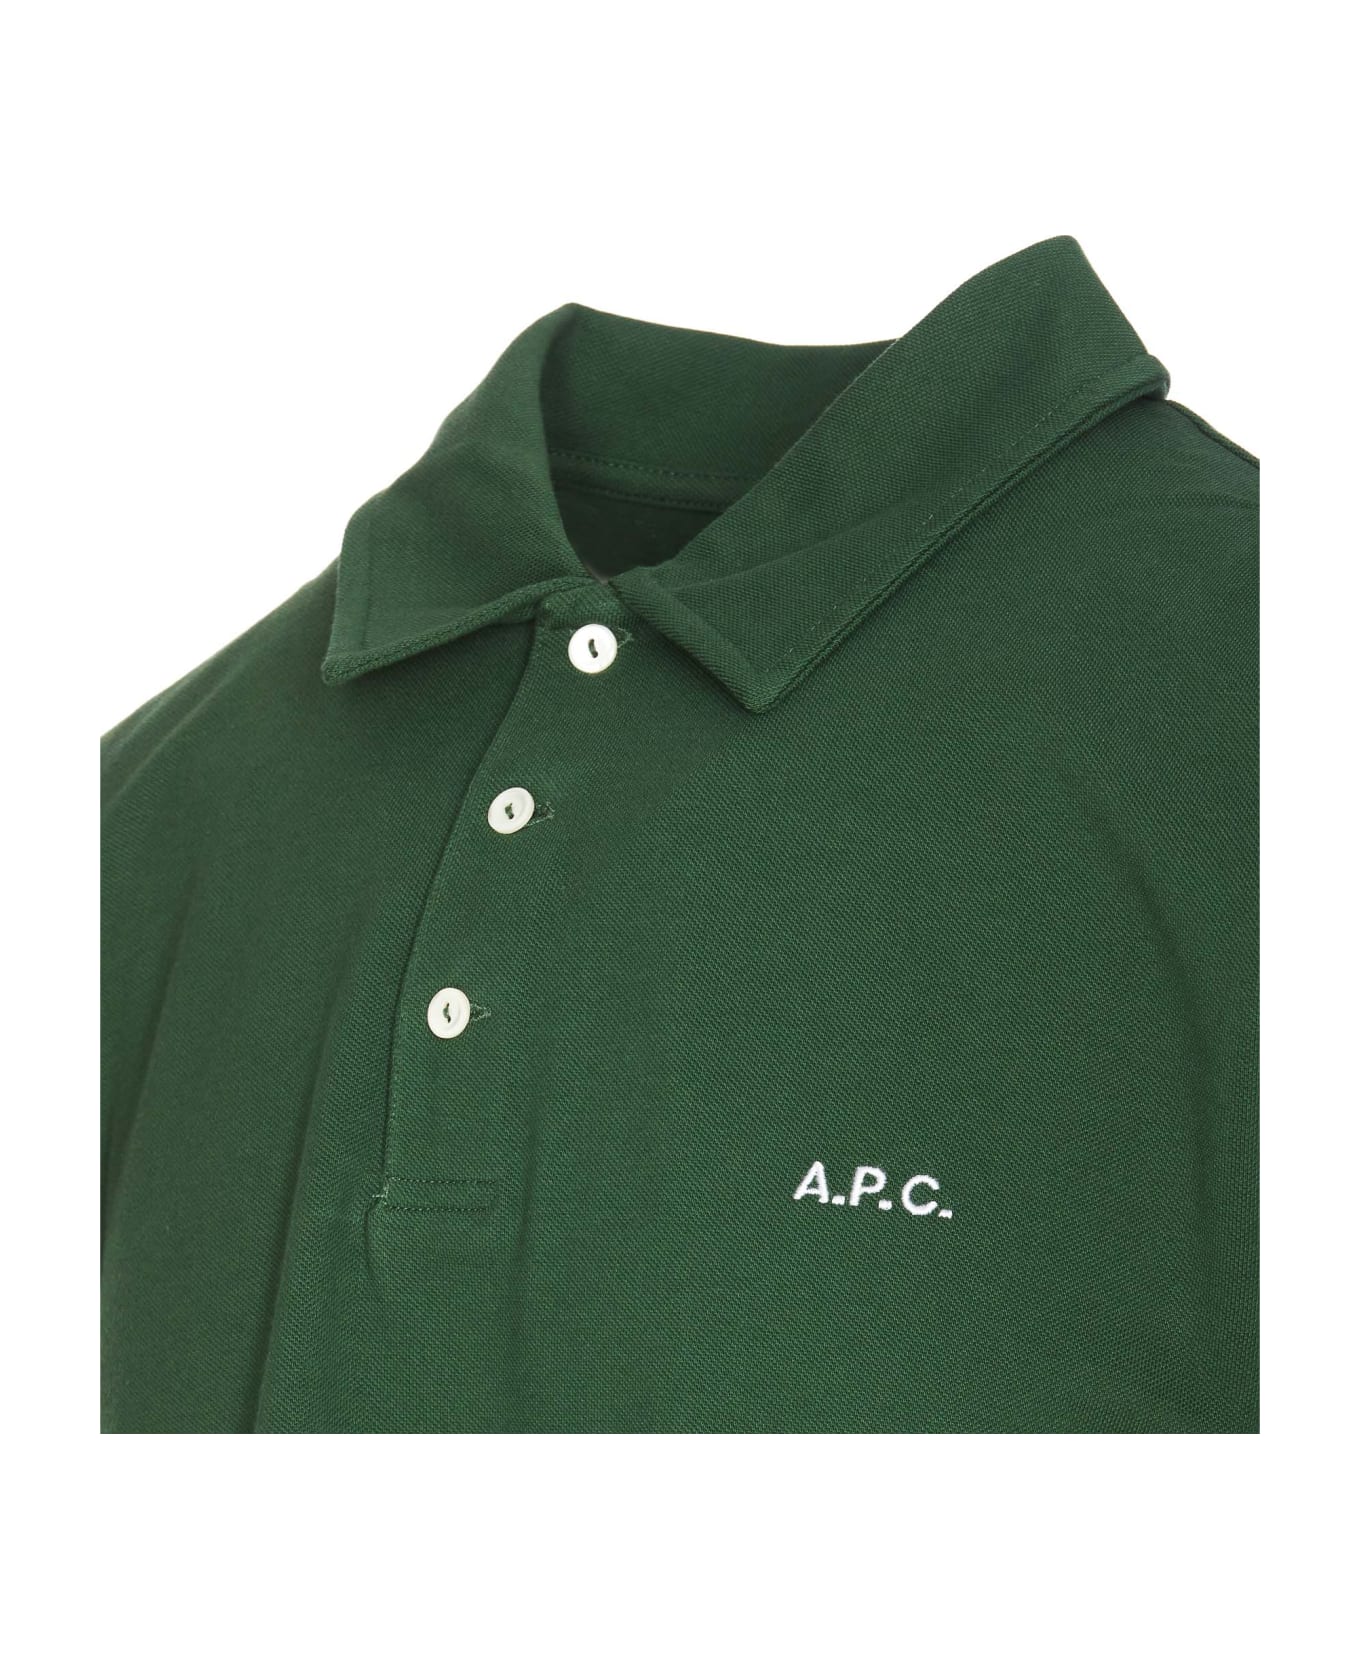 A.P.C. Austin Polo - Green ポロシャツ